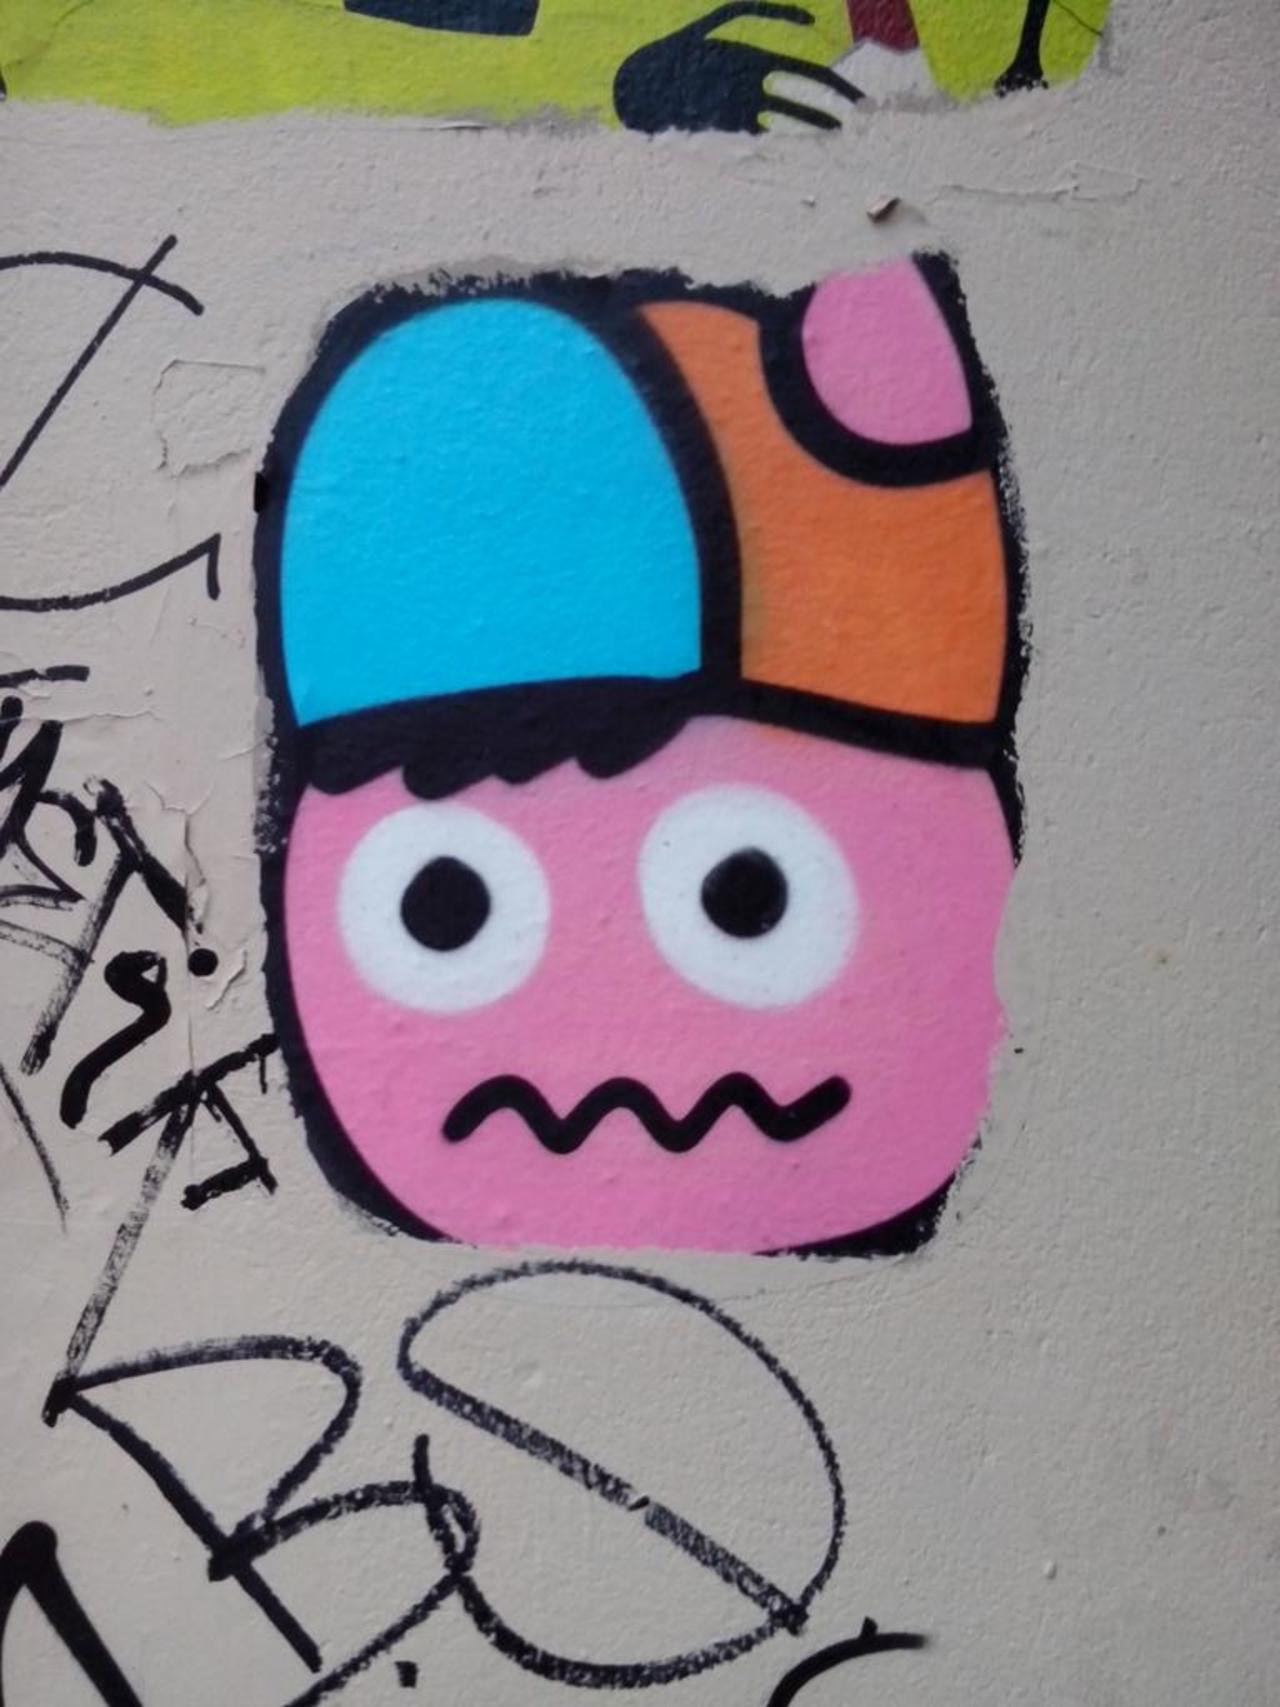 RT @patrickparis18: #streetart #urbanart #graffiti #painting #wall #mural #Paris #jaimeParis http://t.co/Zq041zkXsB